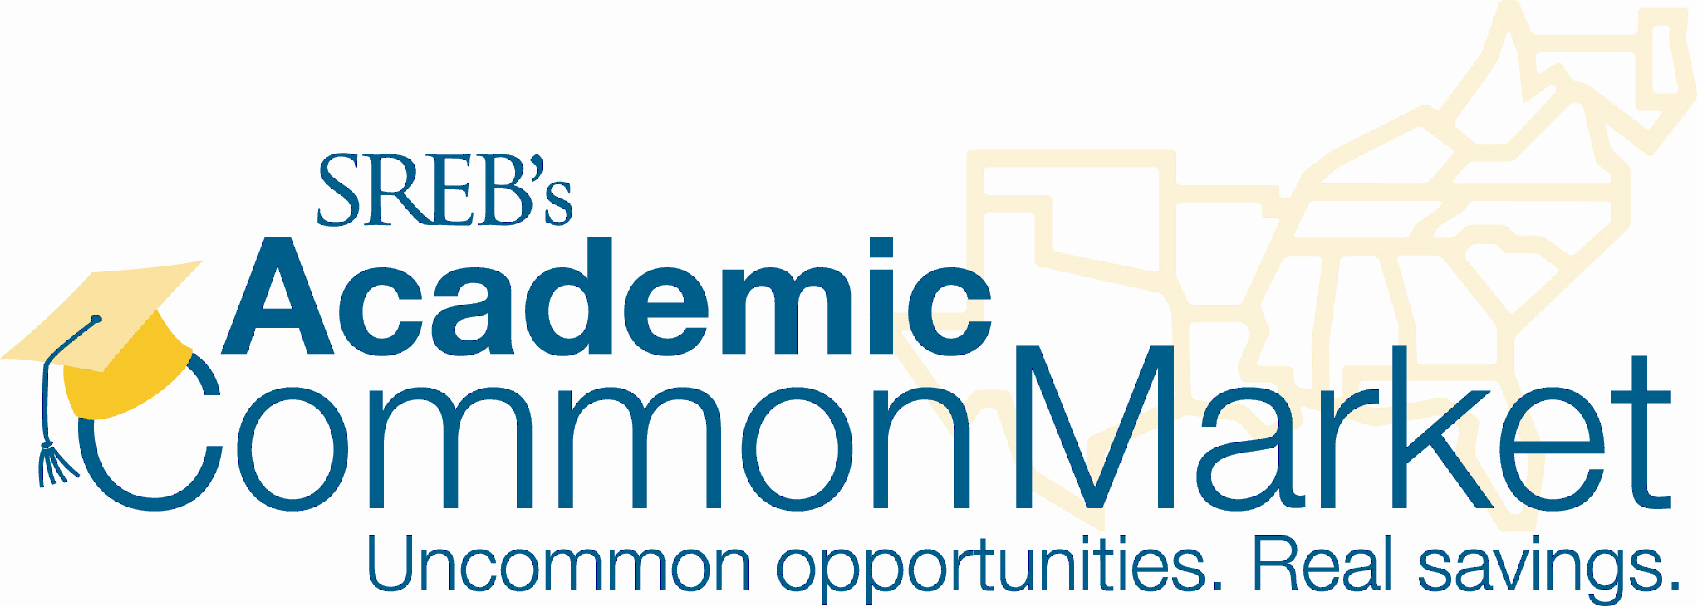 SREB's Academic Common Market Logo